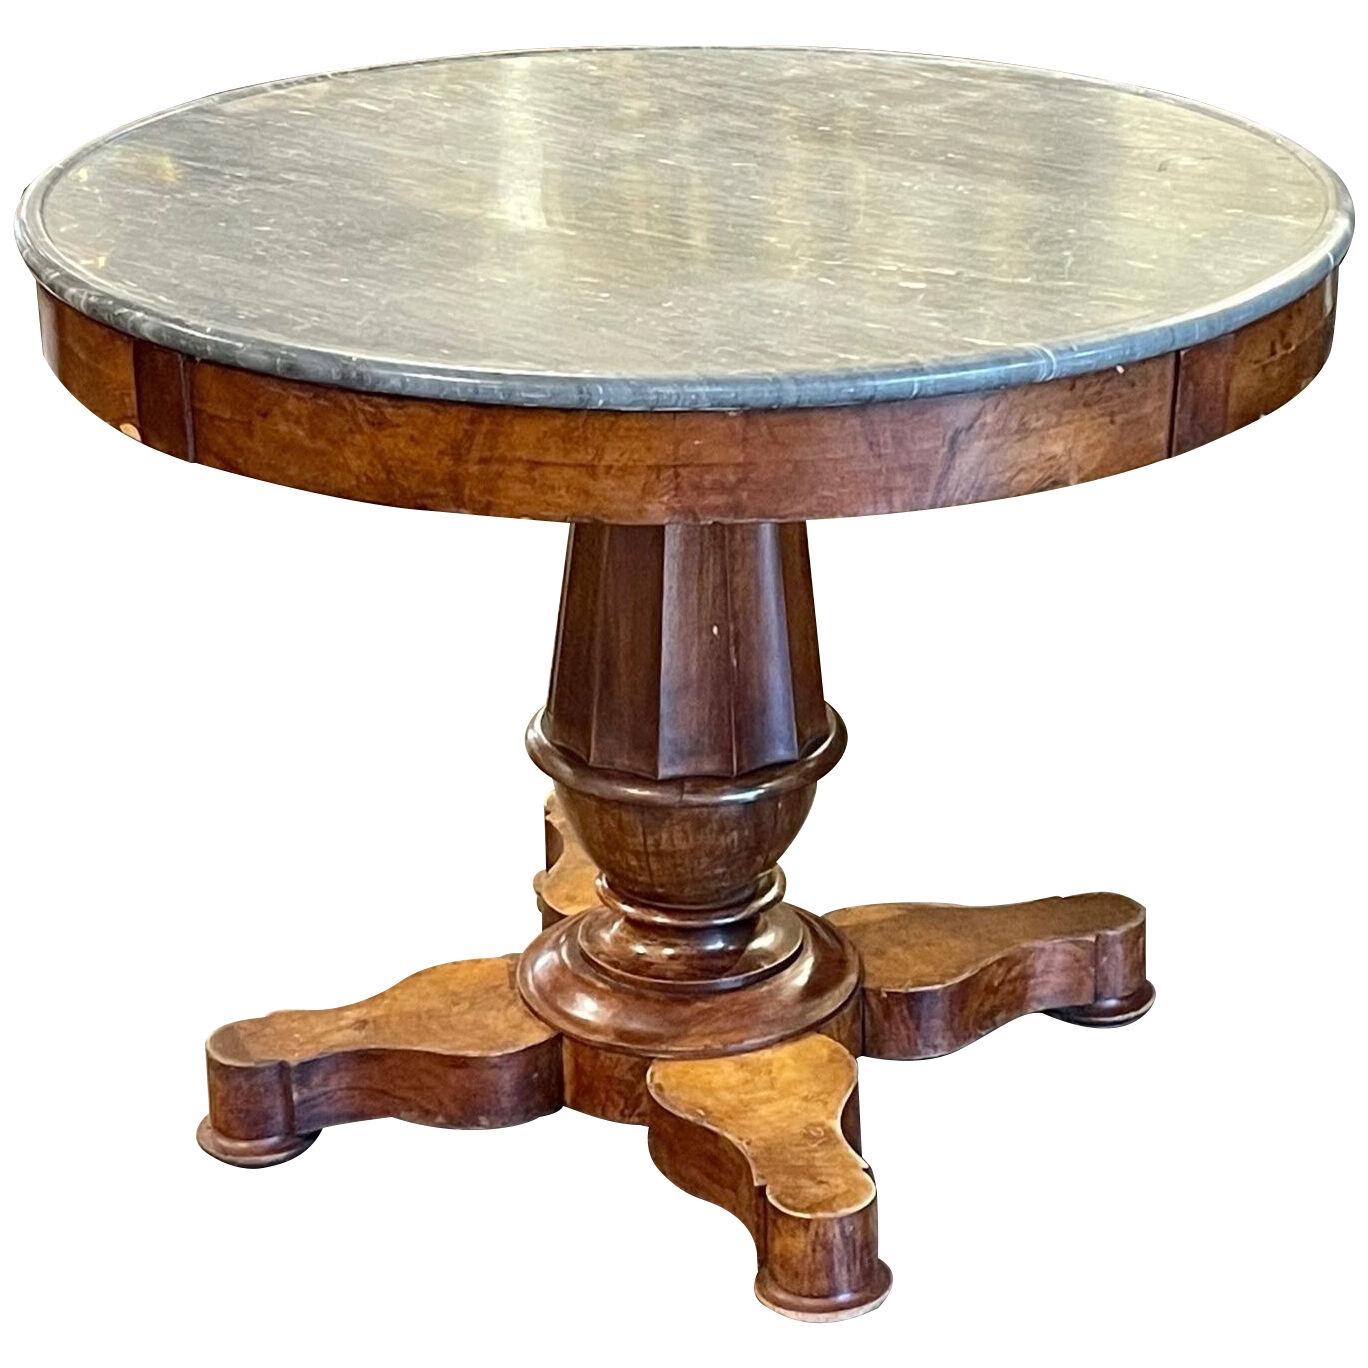 19th Century Italian Carved Walnut Center Table